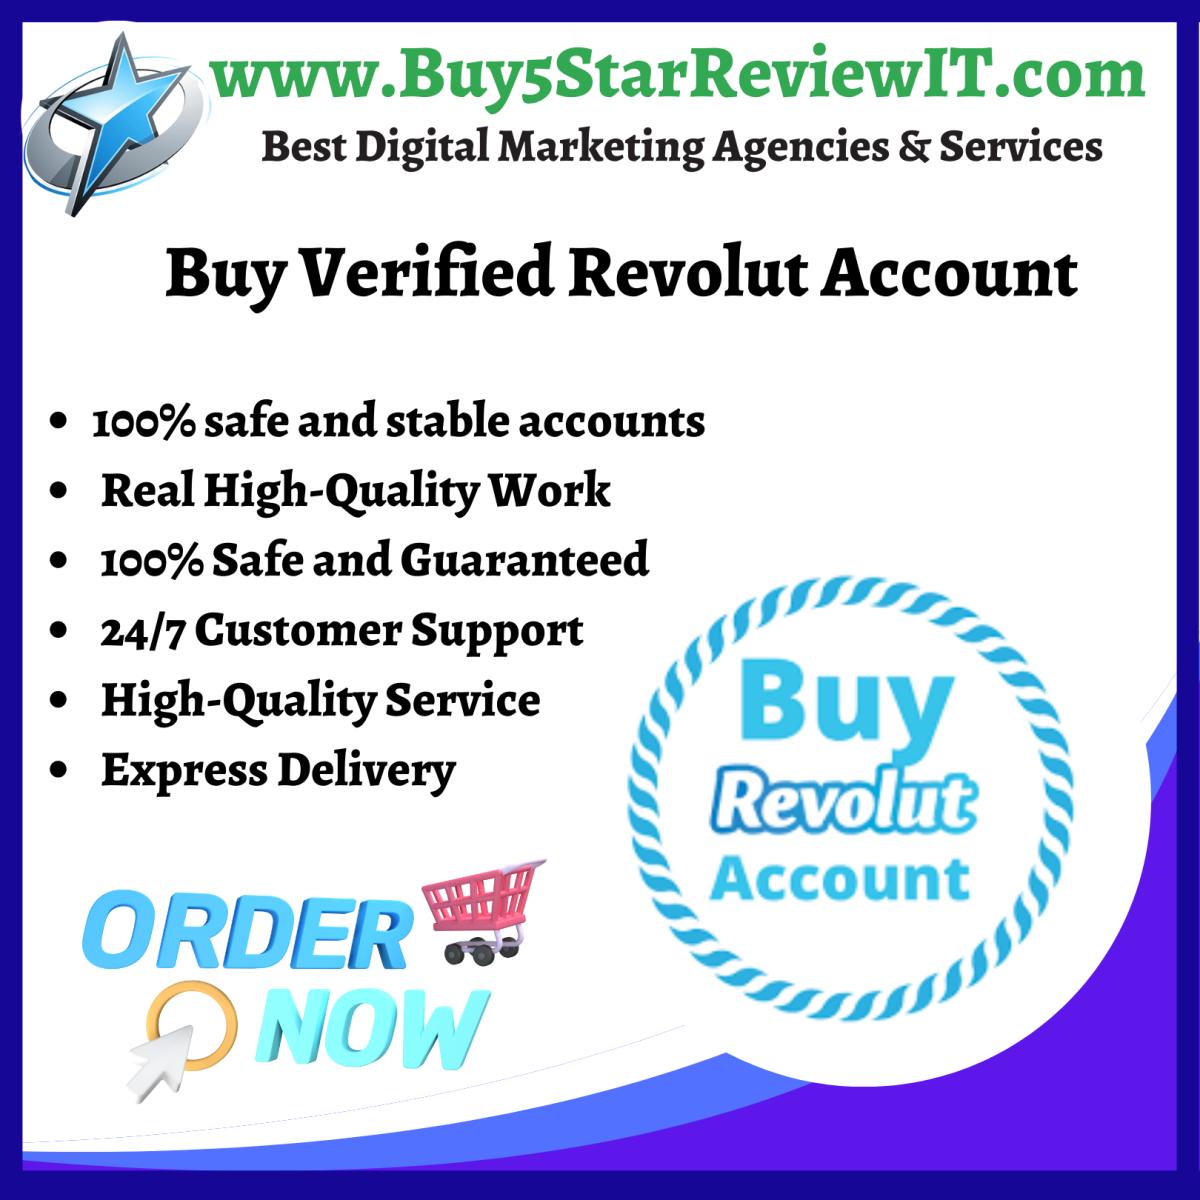 Buy Verified Revolut Account - Buy 5 Star Review IT